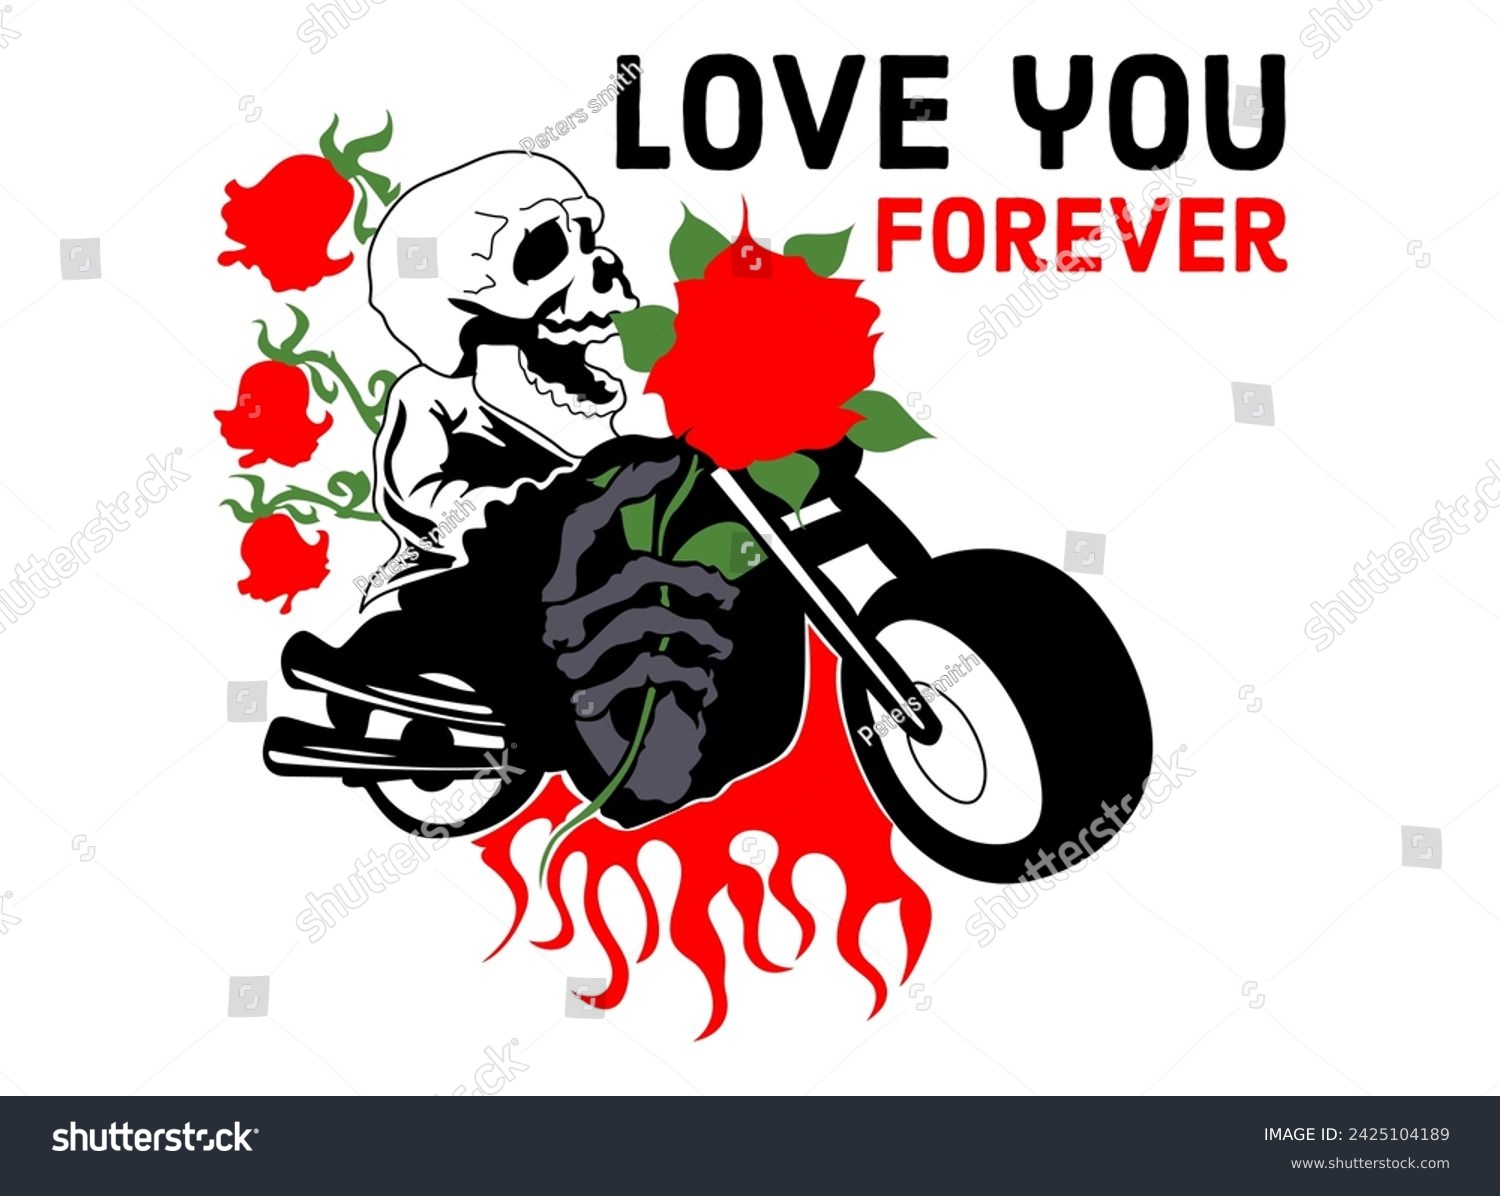 SVG of SkullI In Bike Love you forever svg